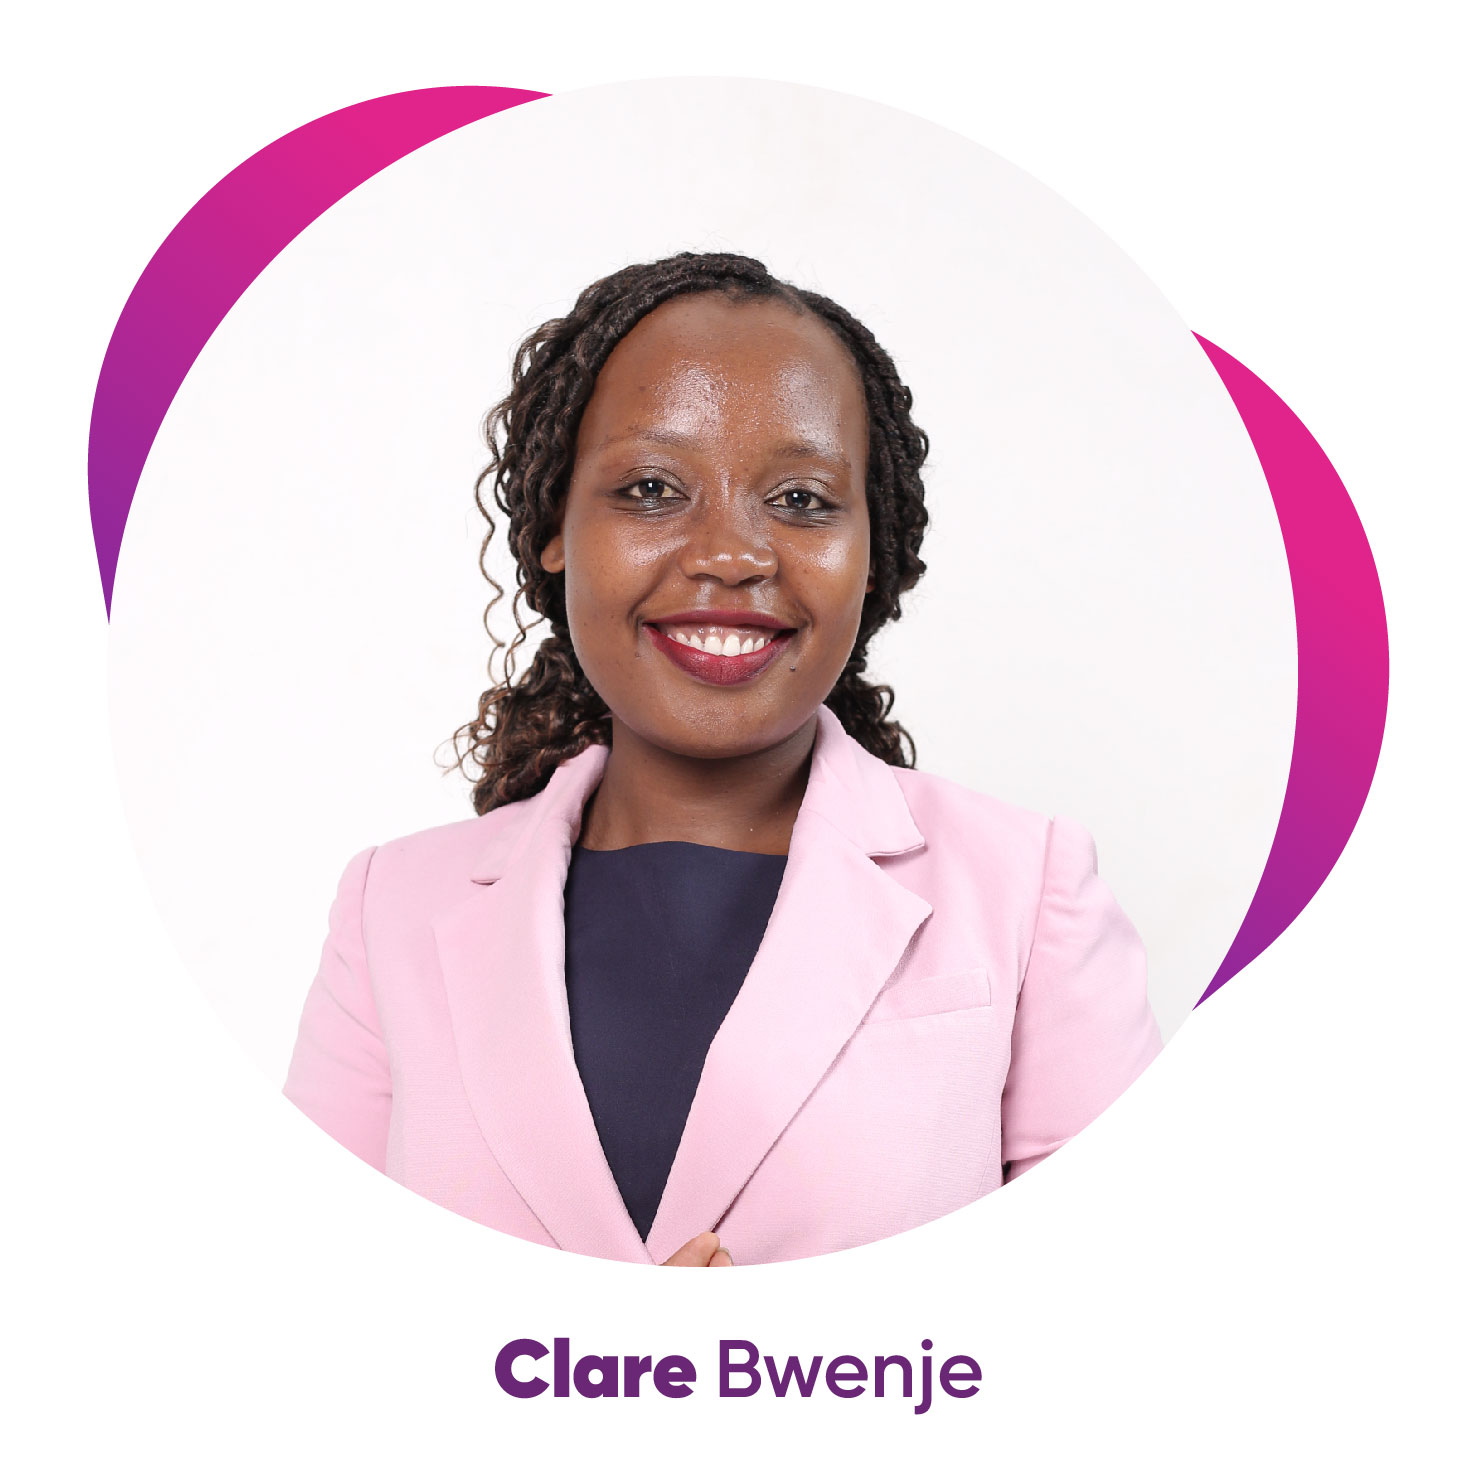 Clare Bwenje